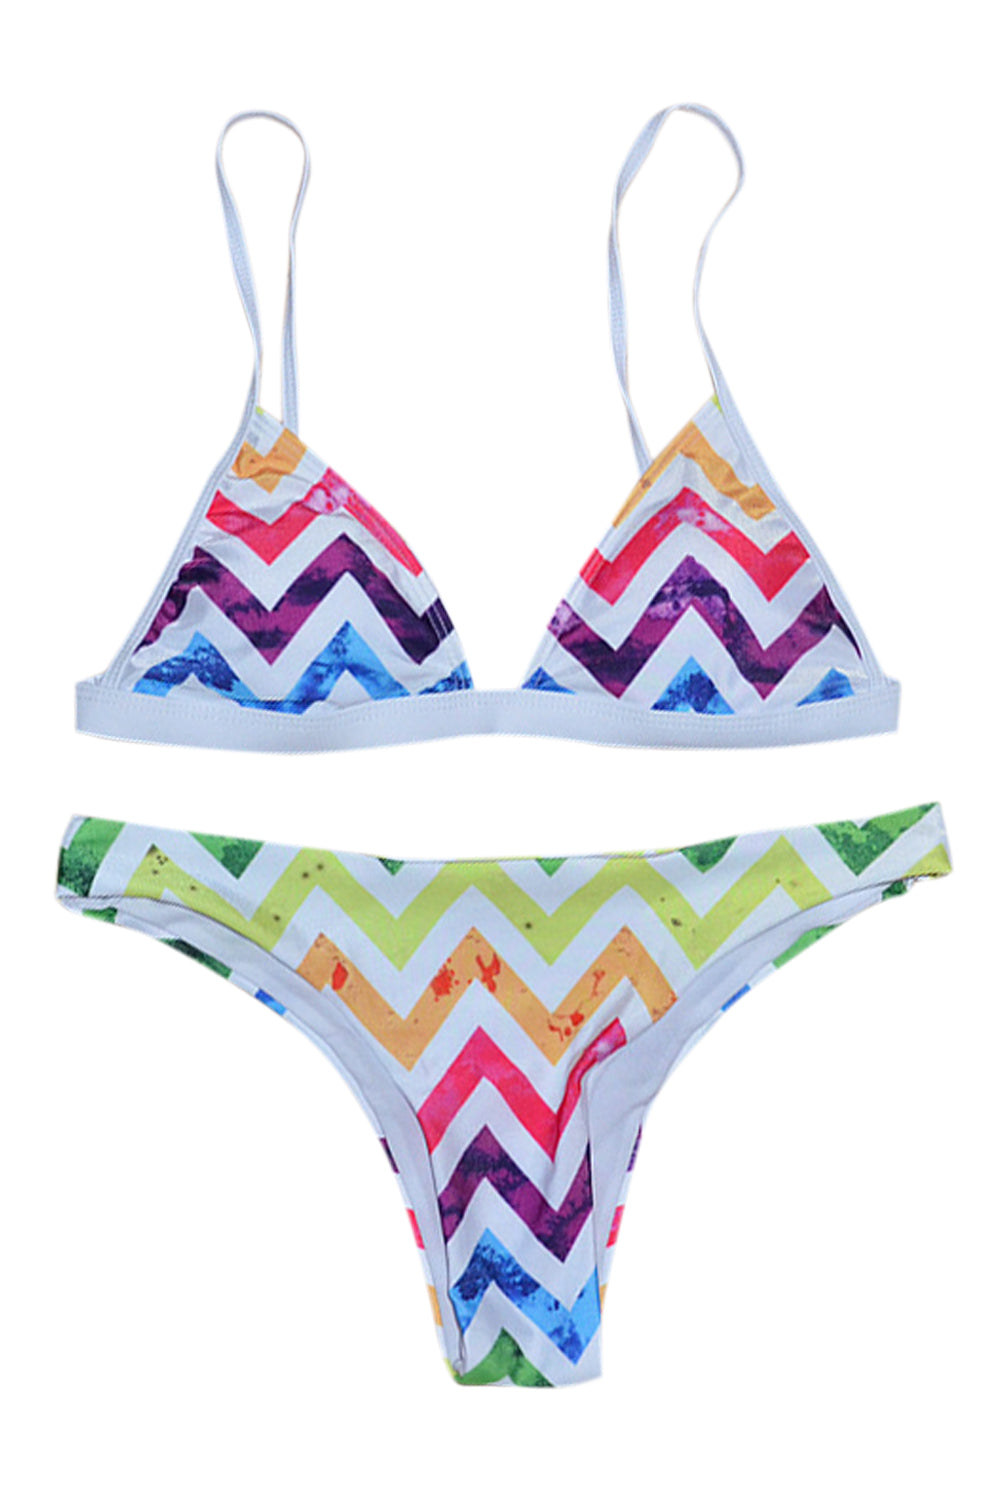 Iyasson Colorful Printing Triangle Top Bikini Set